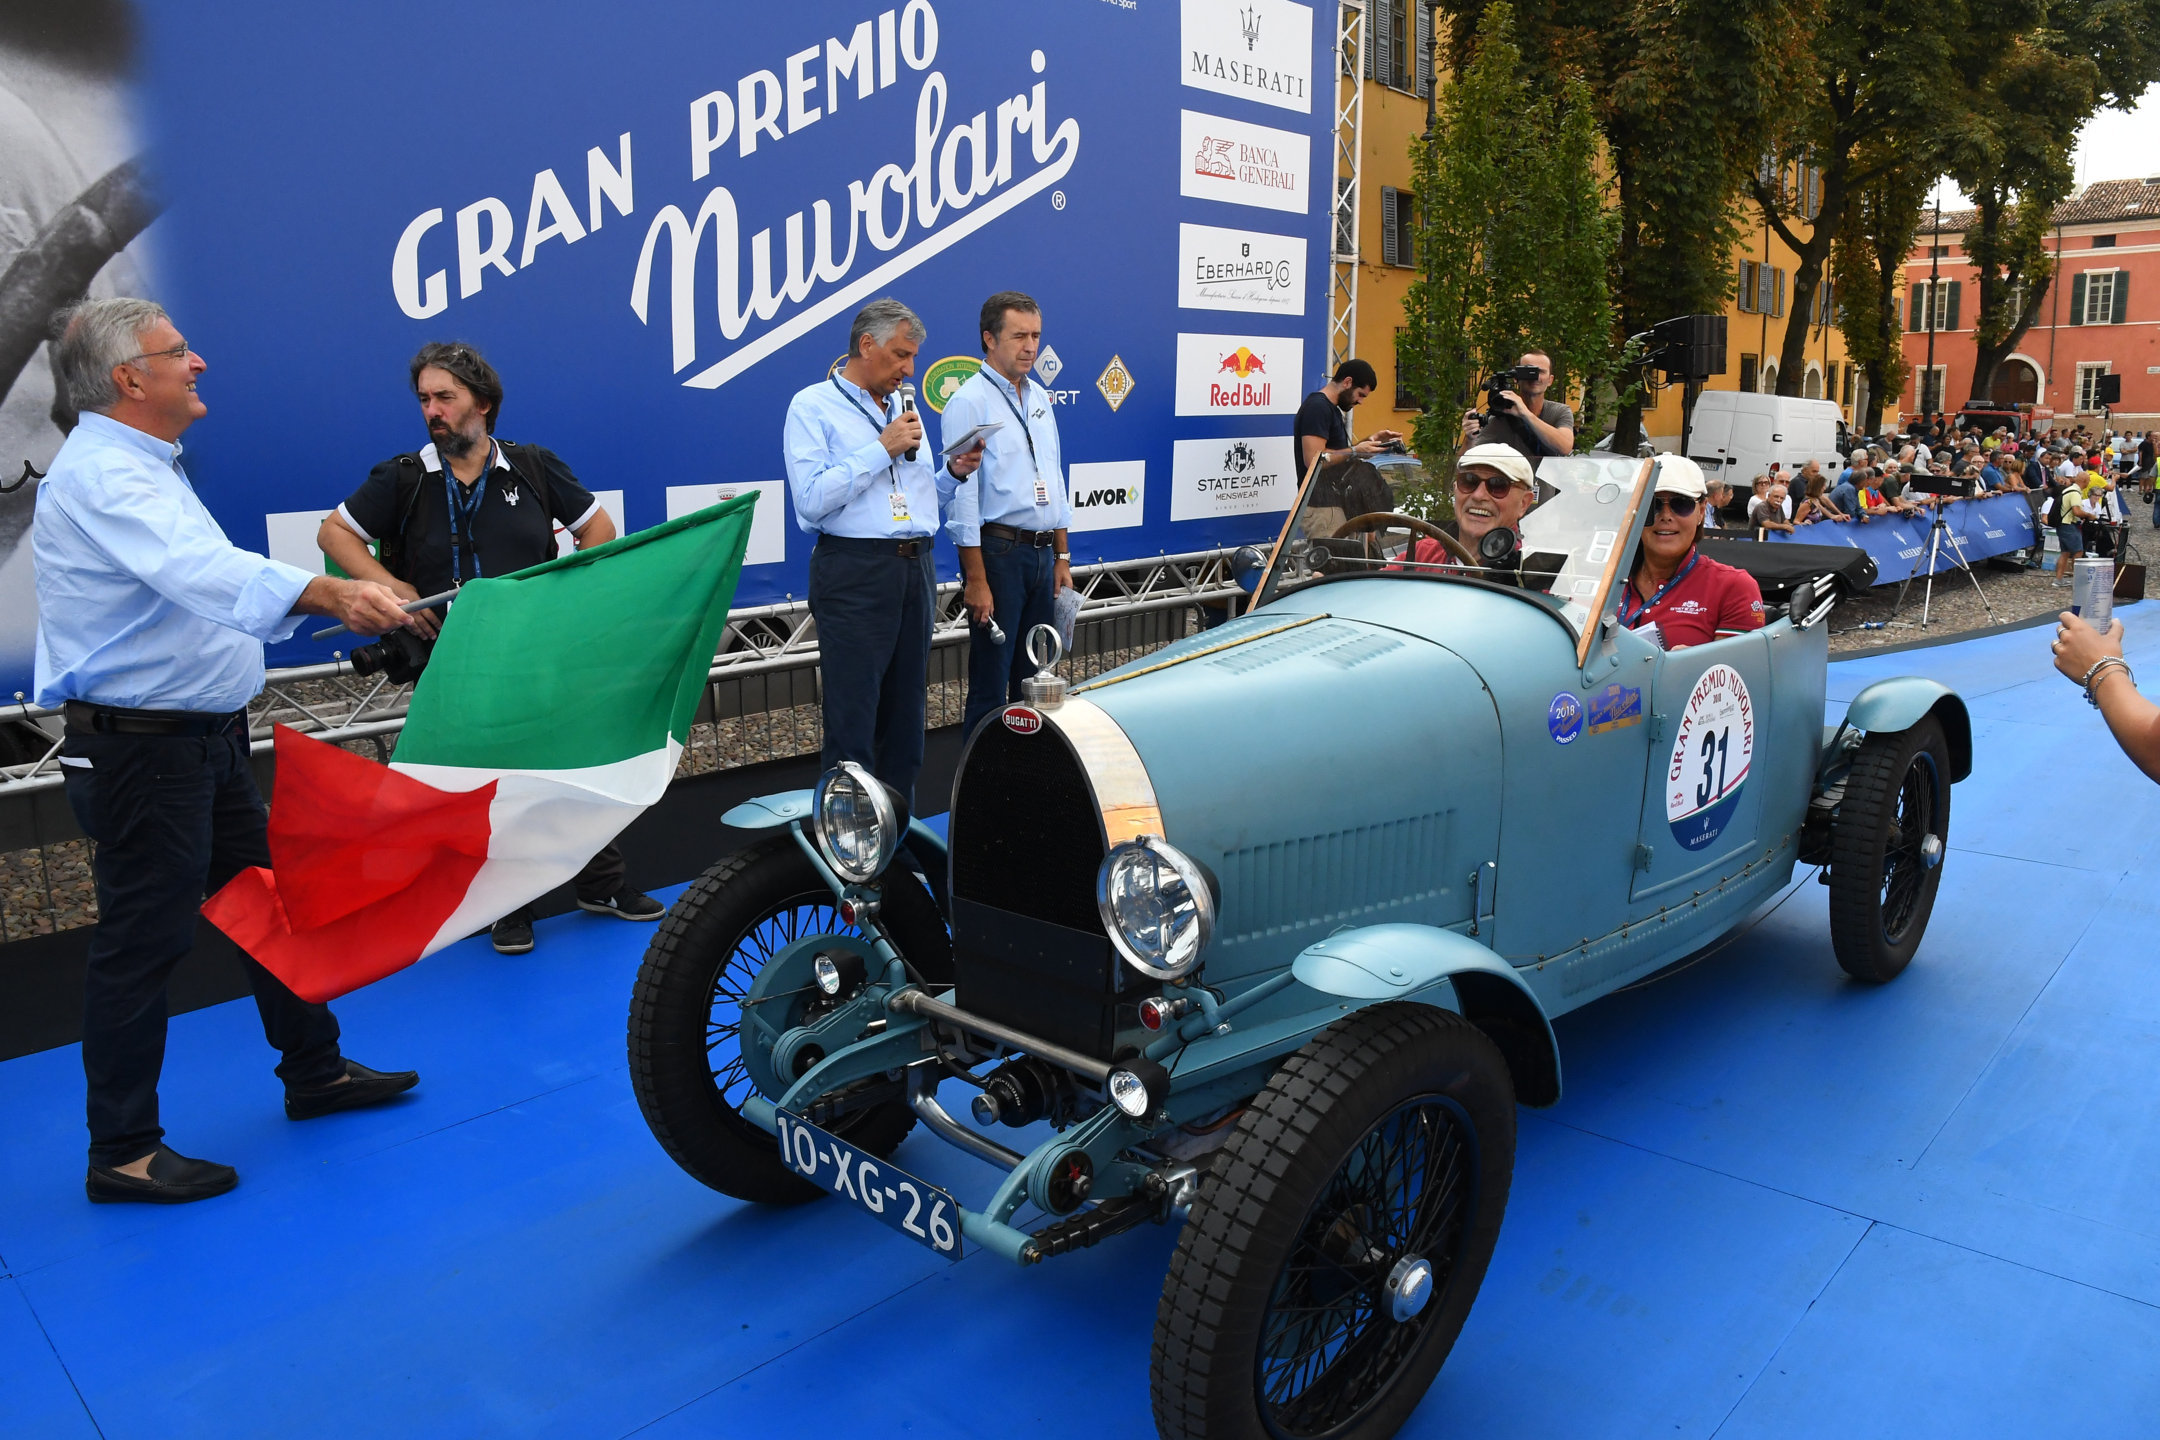 The Nuvolari GP will stop at the Nicolis.